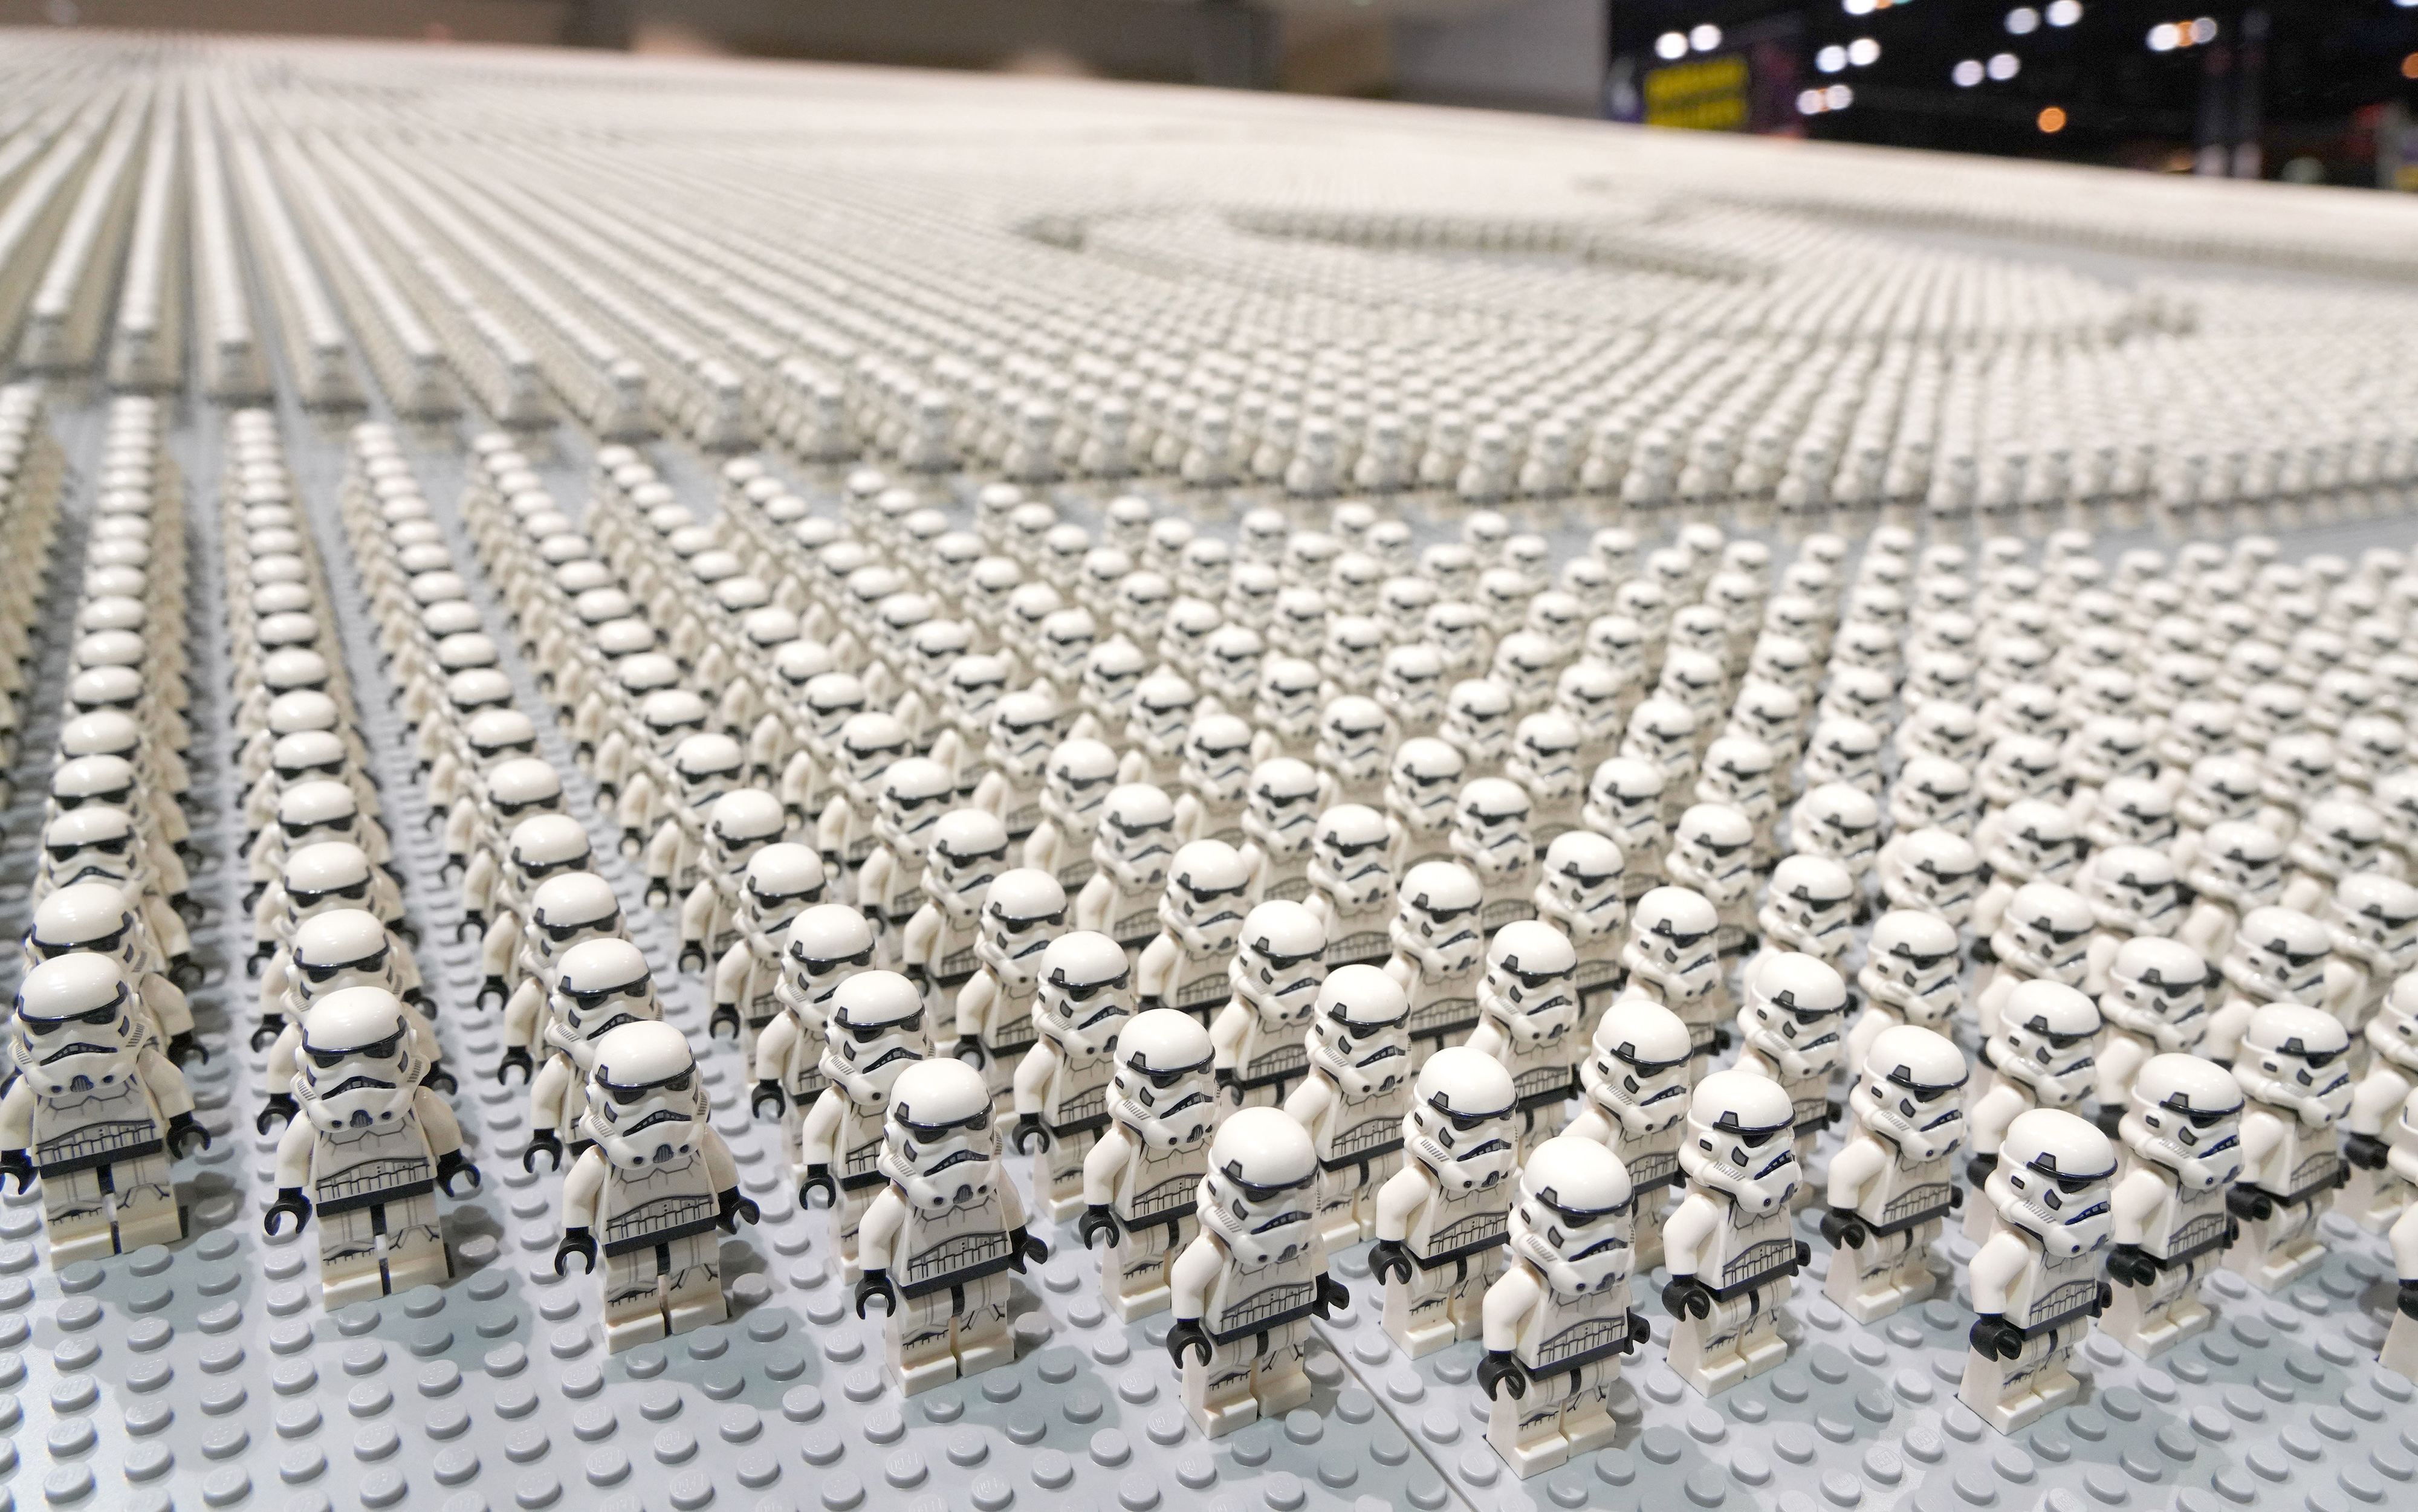 rolle Metropolitan Landbrug Lego Sets World Record at Star Wars Celebration with Stormtrooper Display -  AllEars.Net